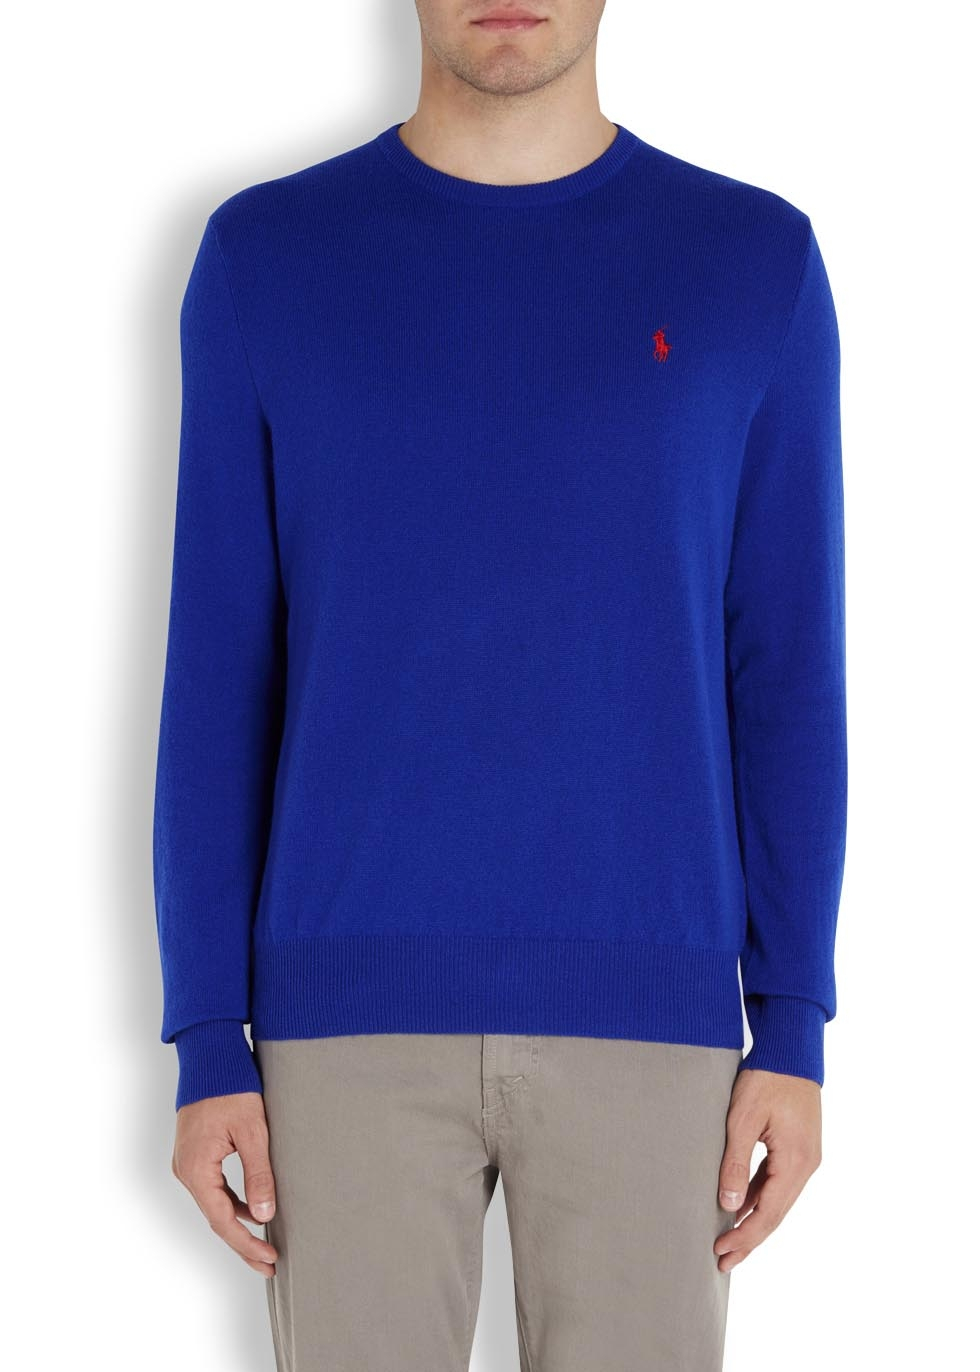 Polo Ralph Lauren Royal Blue Wool Jumper for Men - Lyst